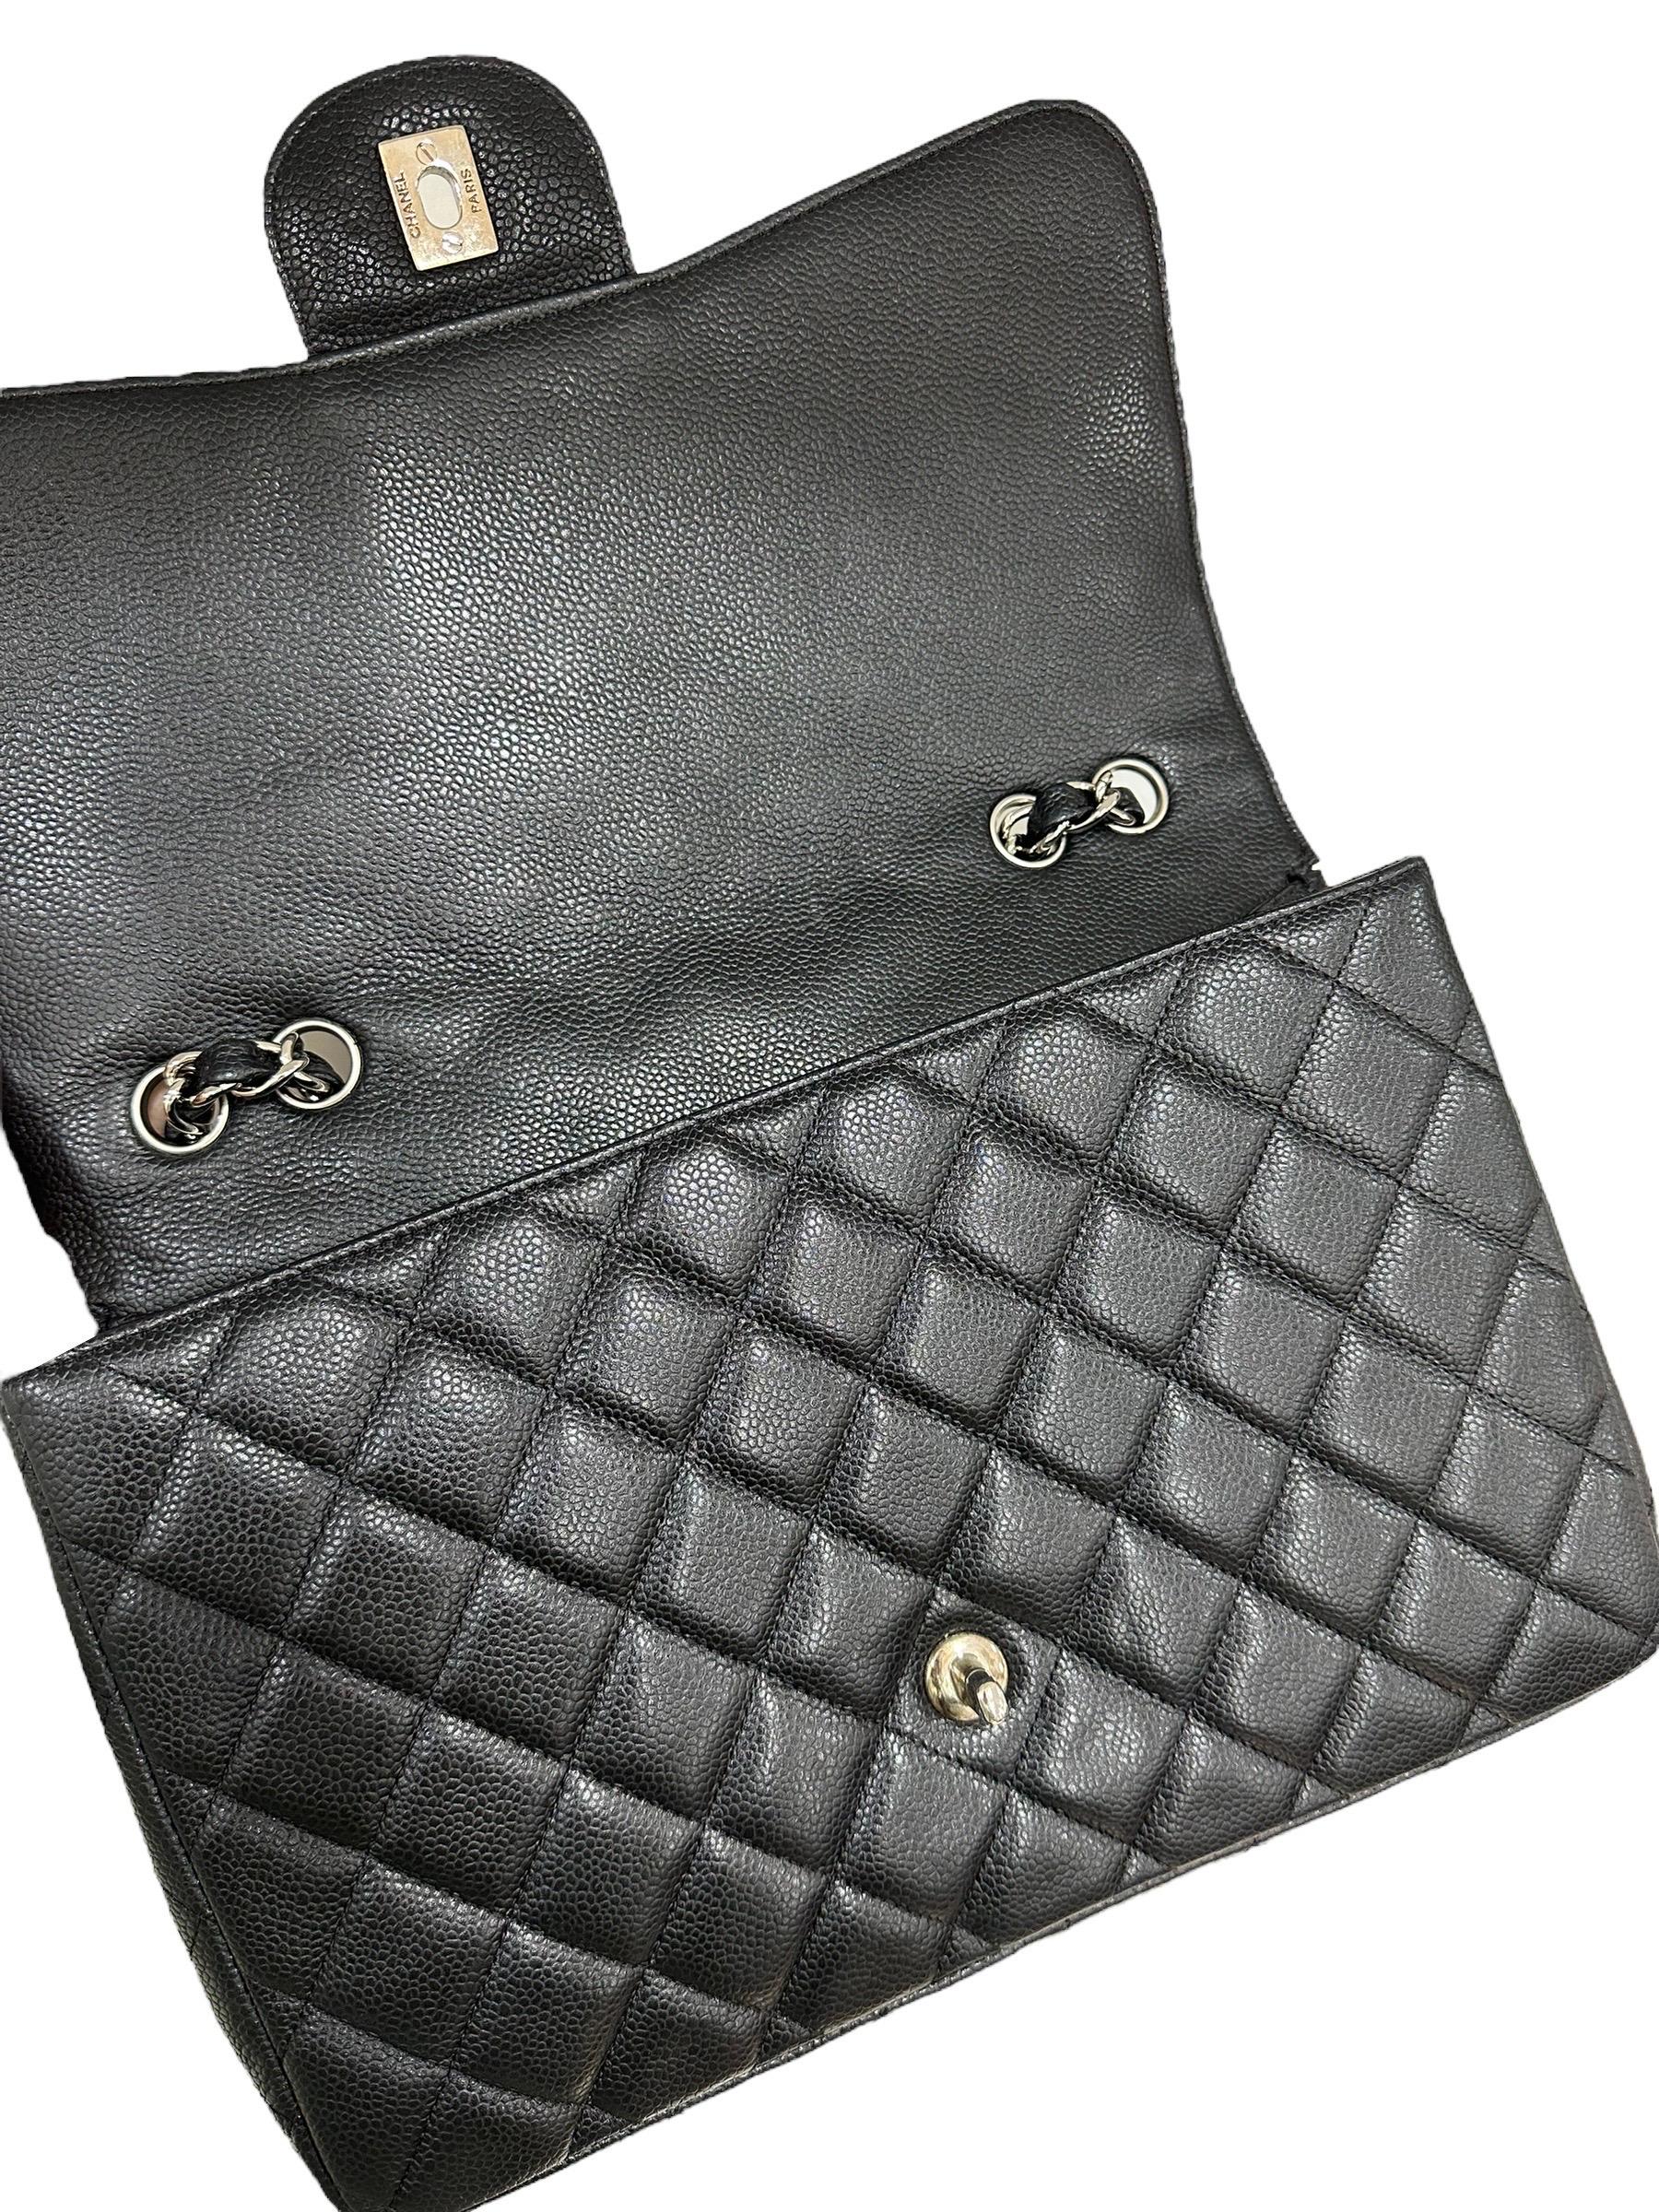 2009 Chanel Jumbo Black Caviar Leather Top Shoulder Bag  For Sale 10